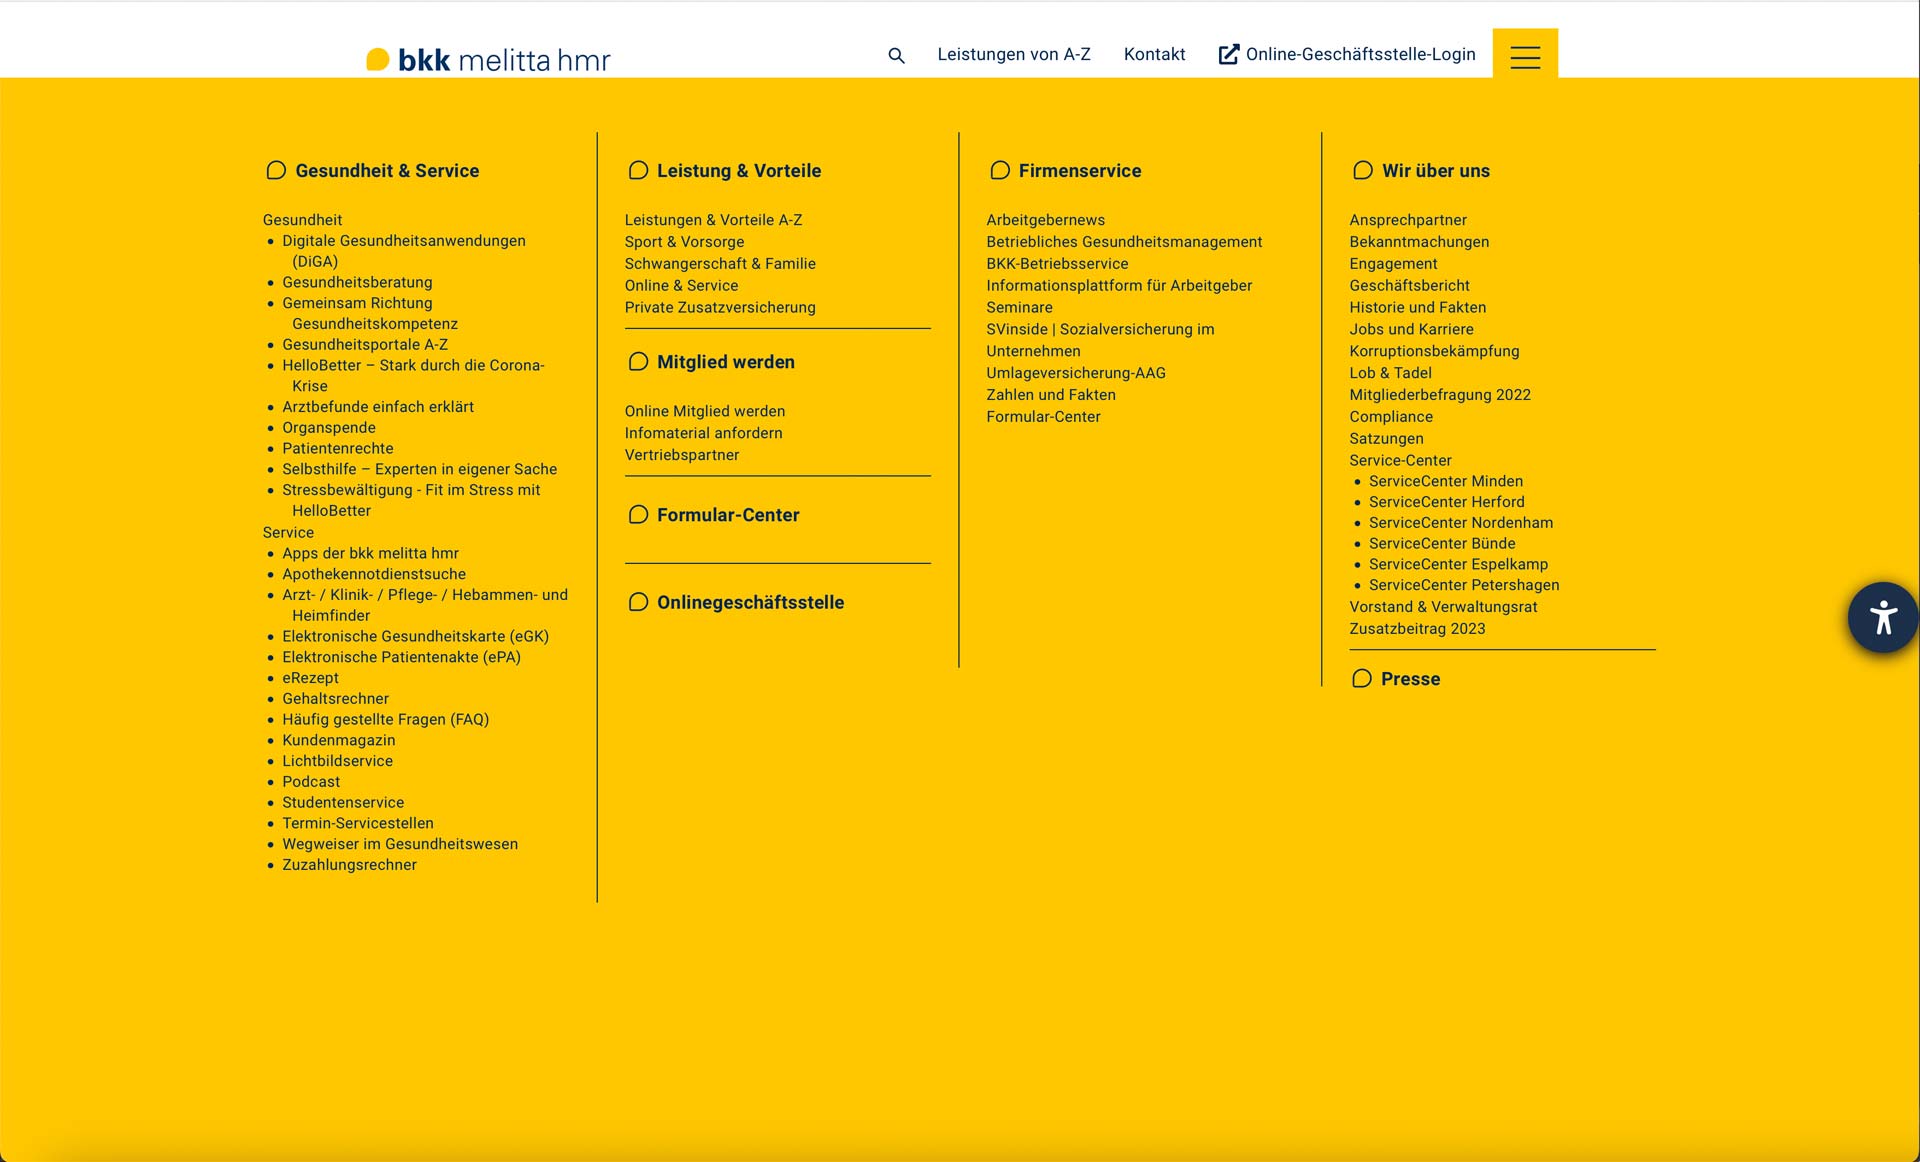 BKK Melitta hmr-Website-Navigation, Menü